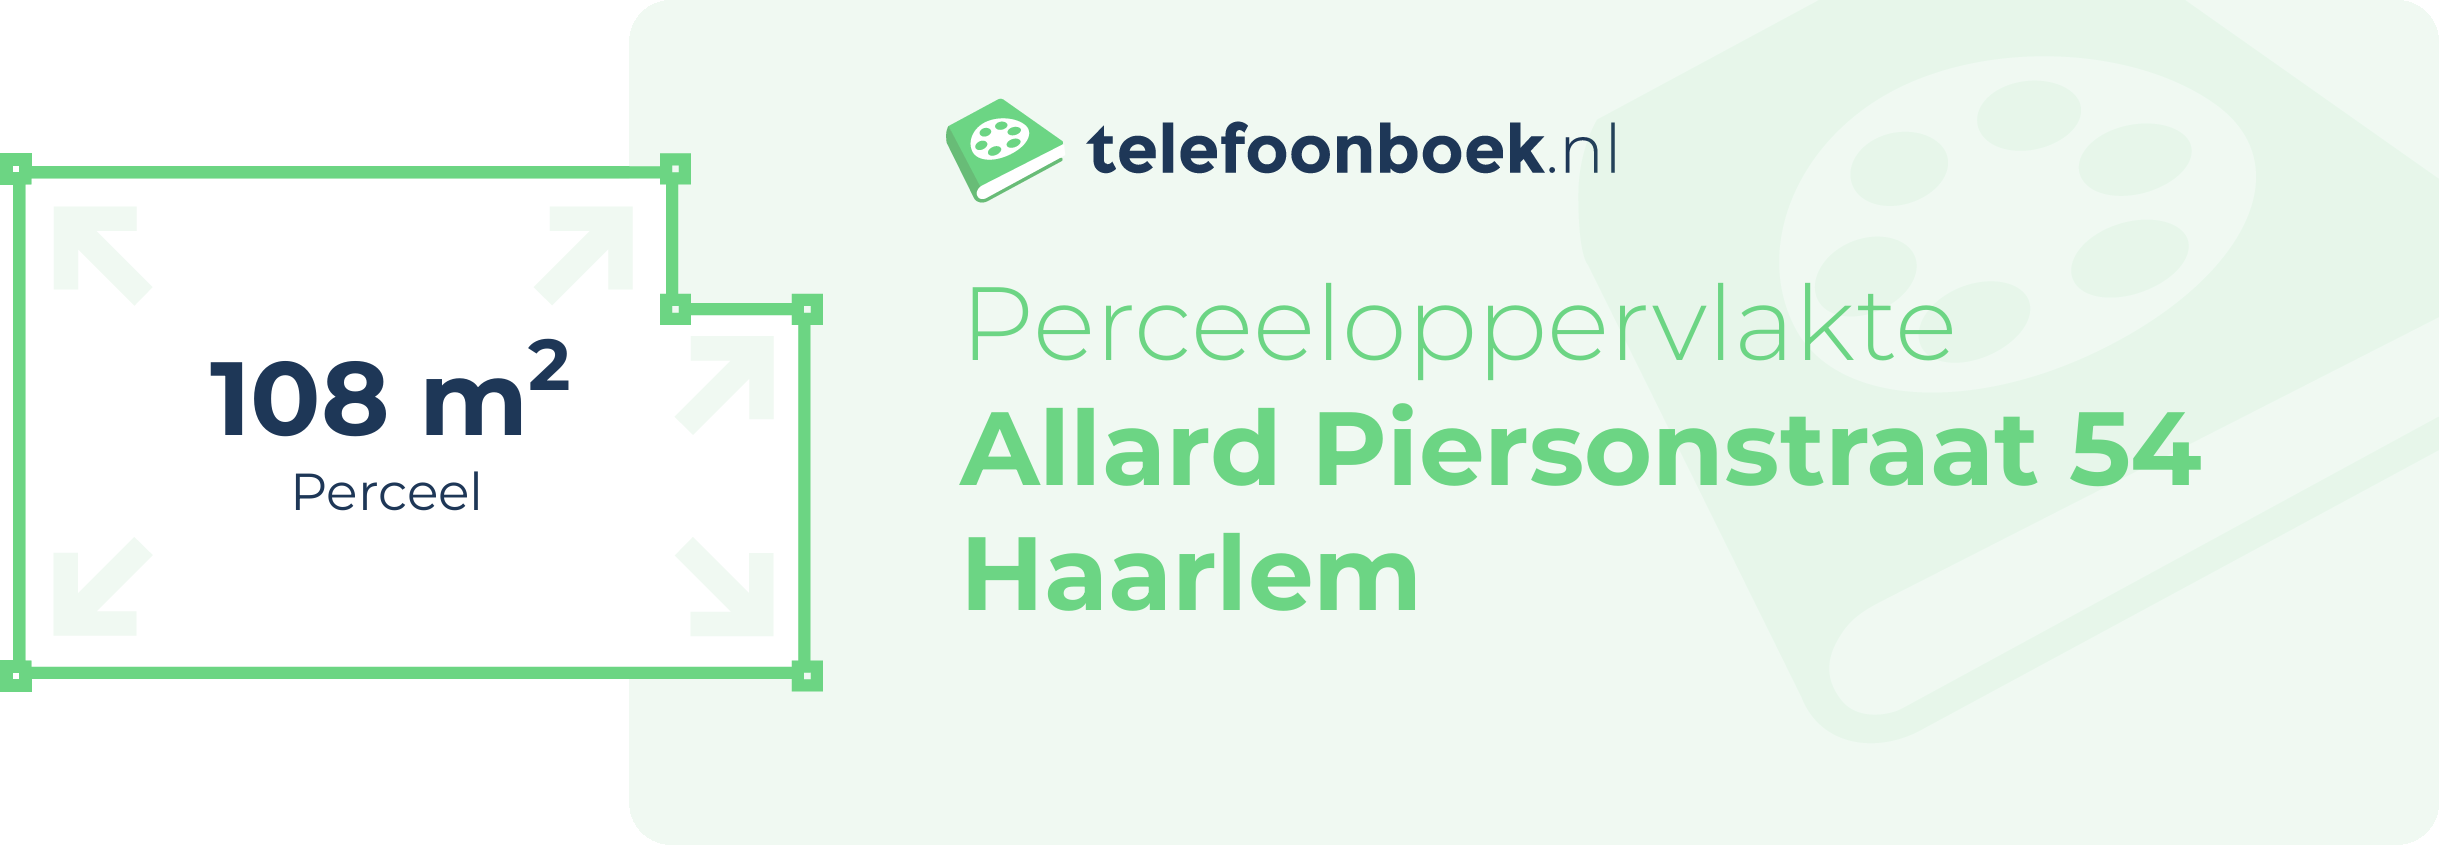 Perceeloppervlakte Allard Piersonstraat 54 Haarlem